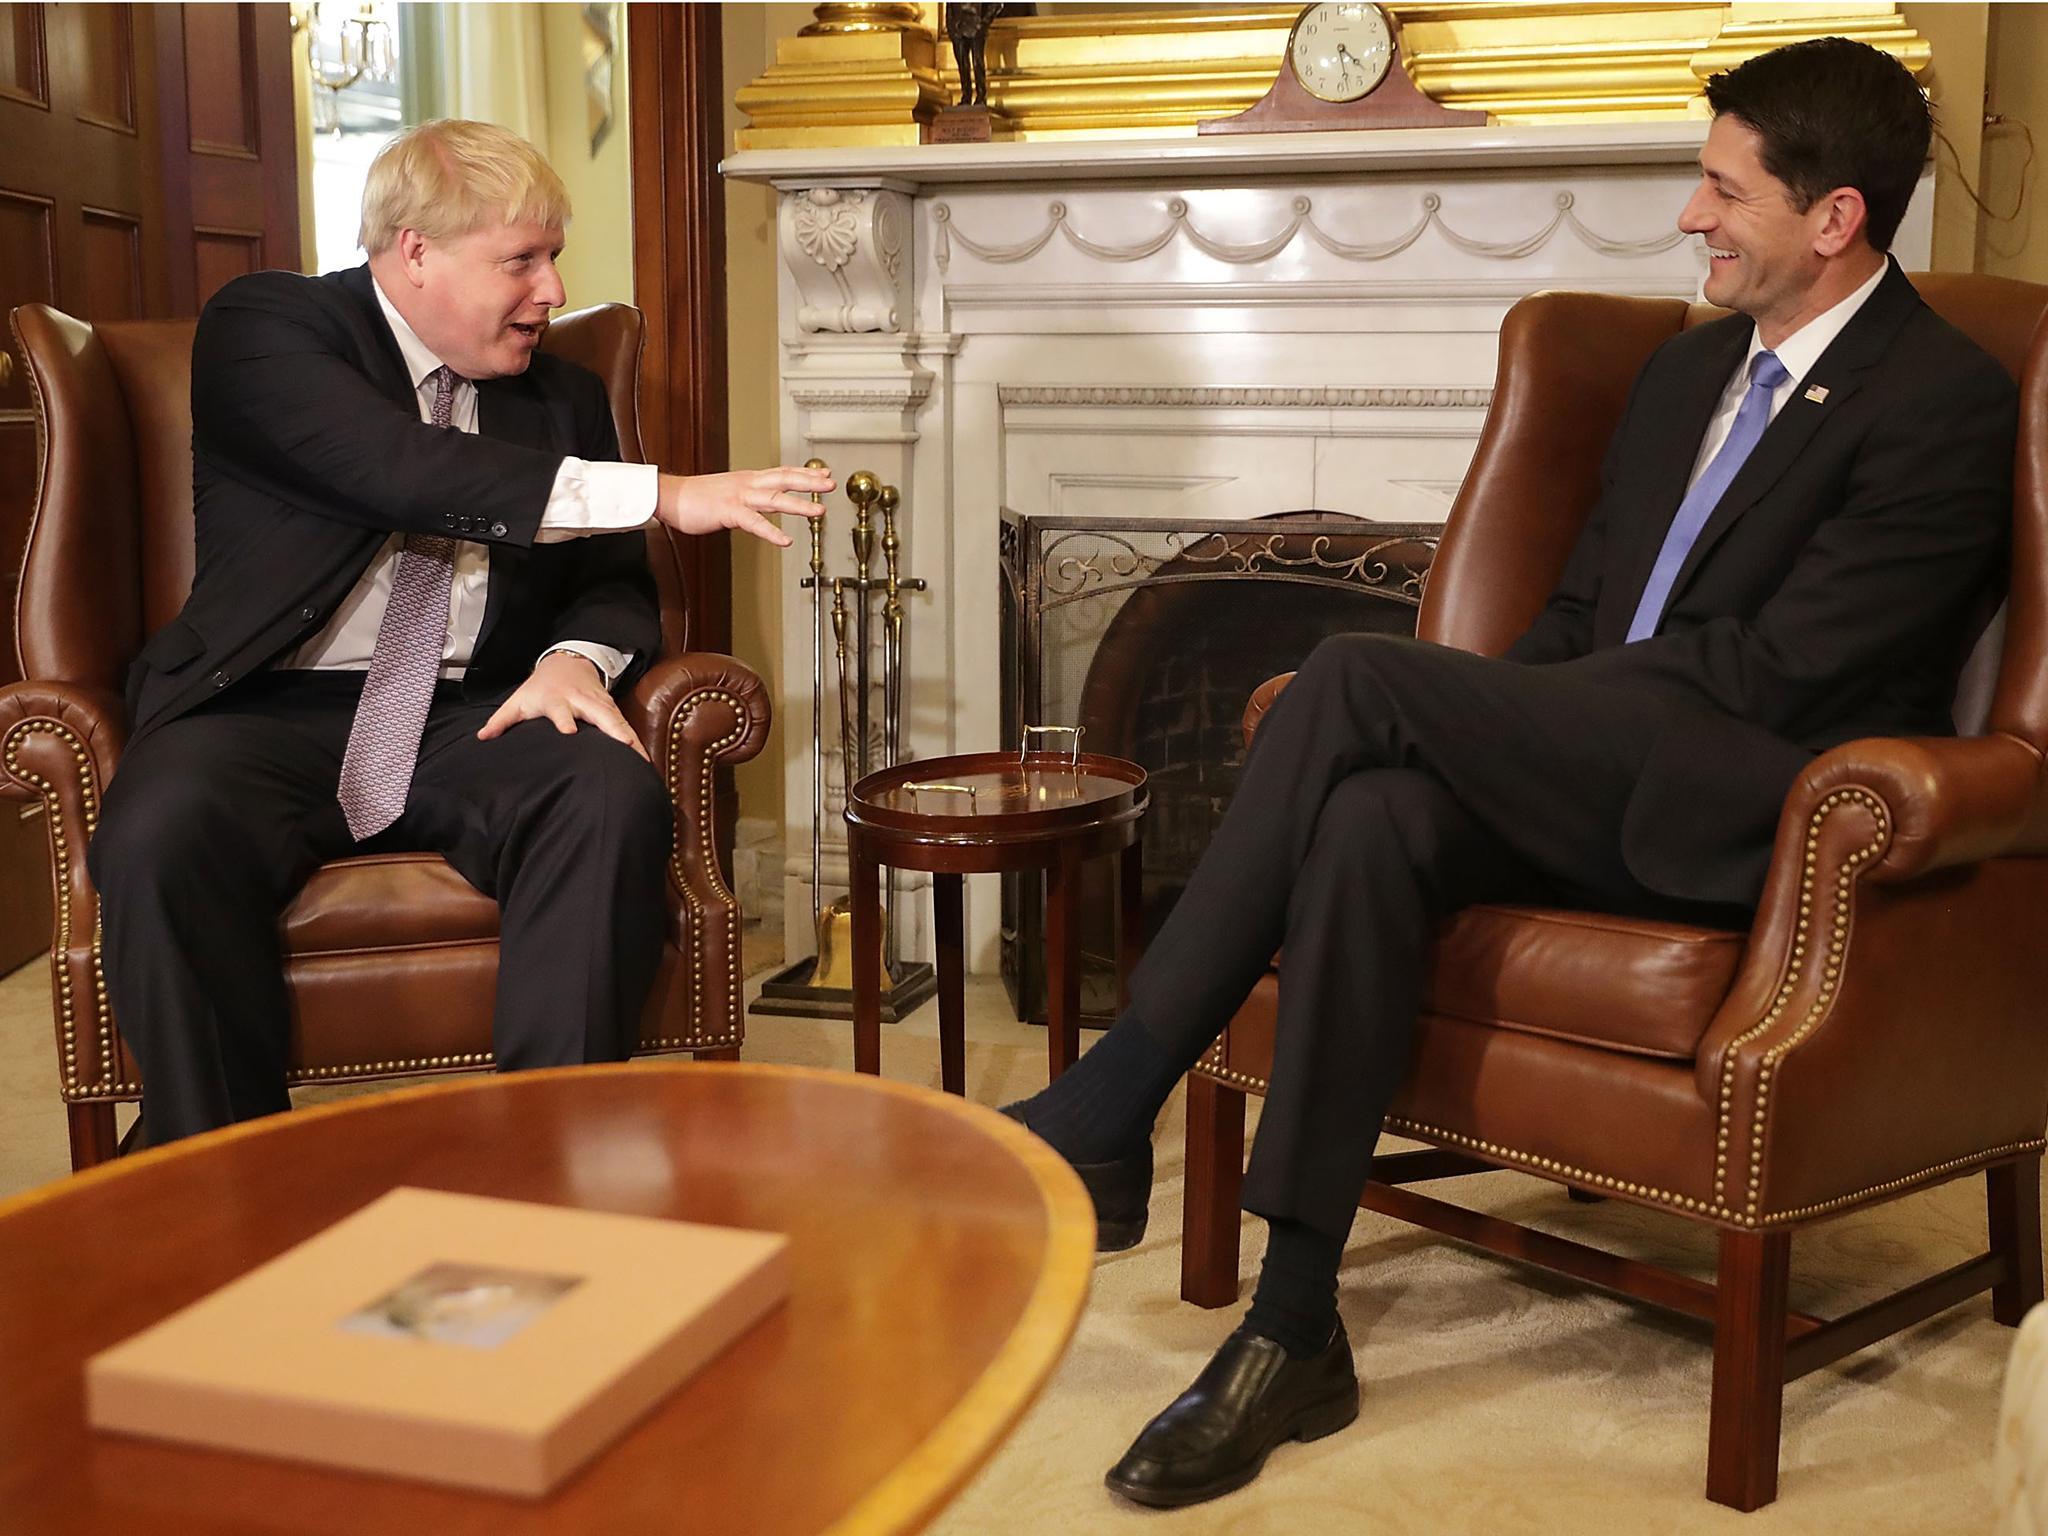 Boris Johnson met senior Republicans, including House of Representatives Speaker Paul Ryan, in Washington